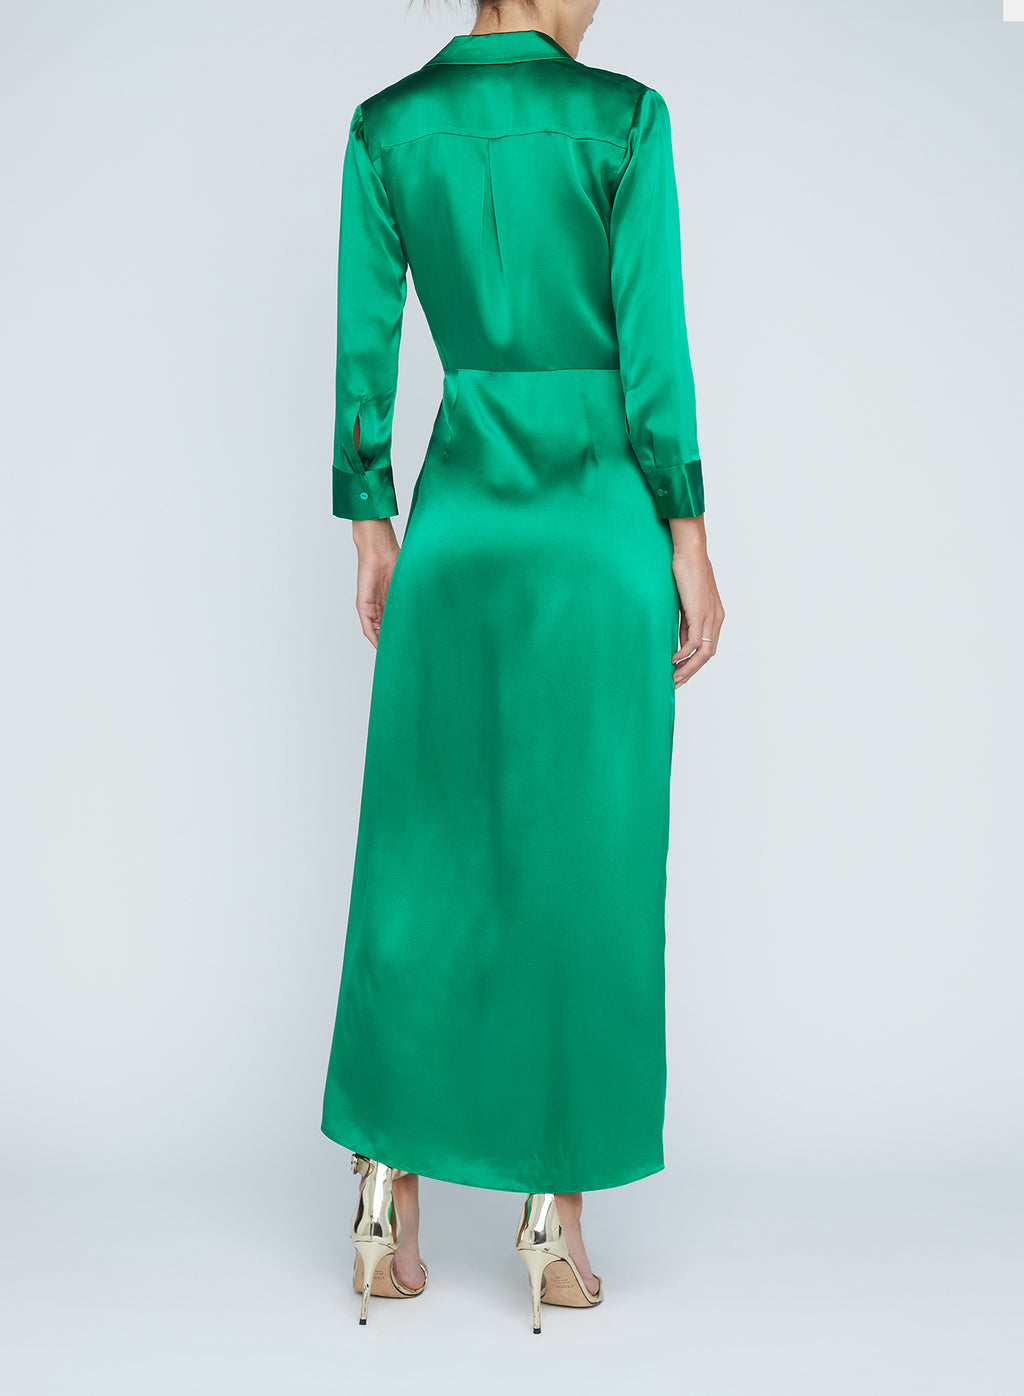 L'agence Kadi Long Wrap Dress in Sea Green